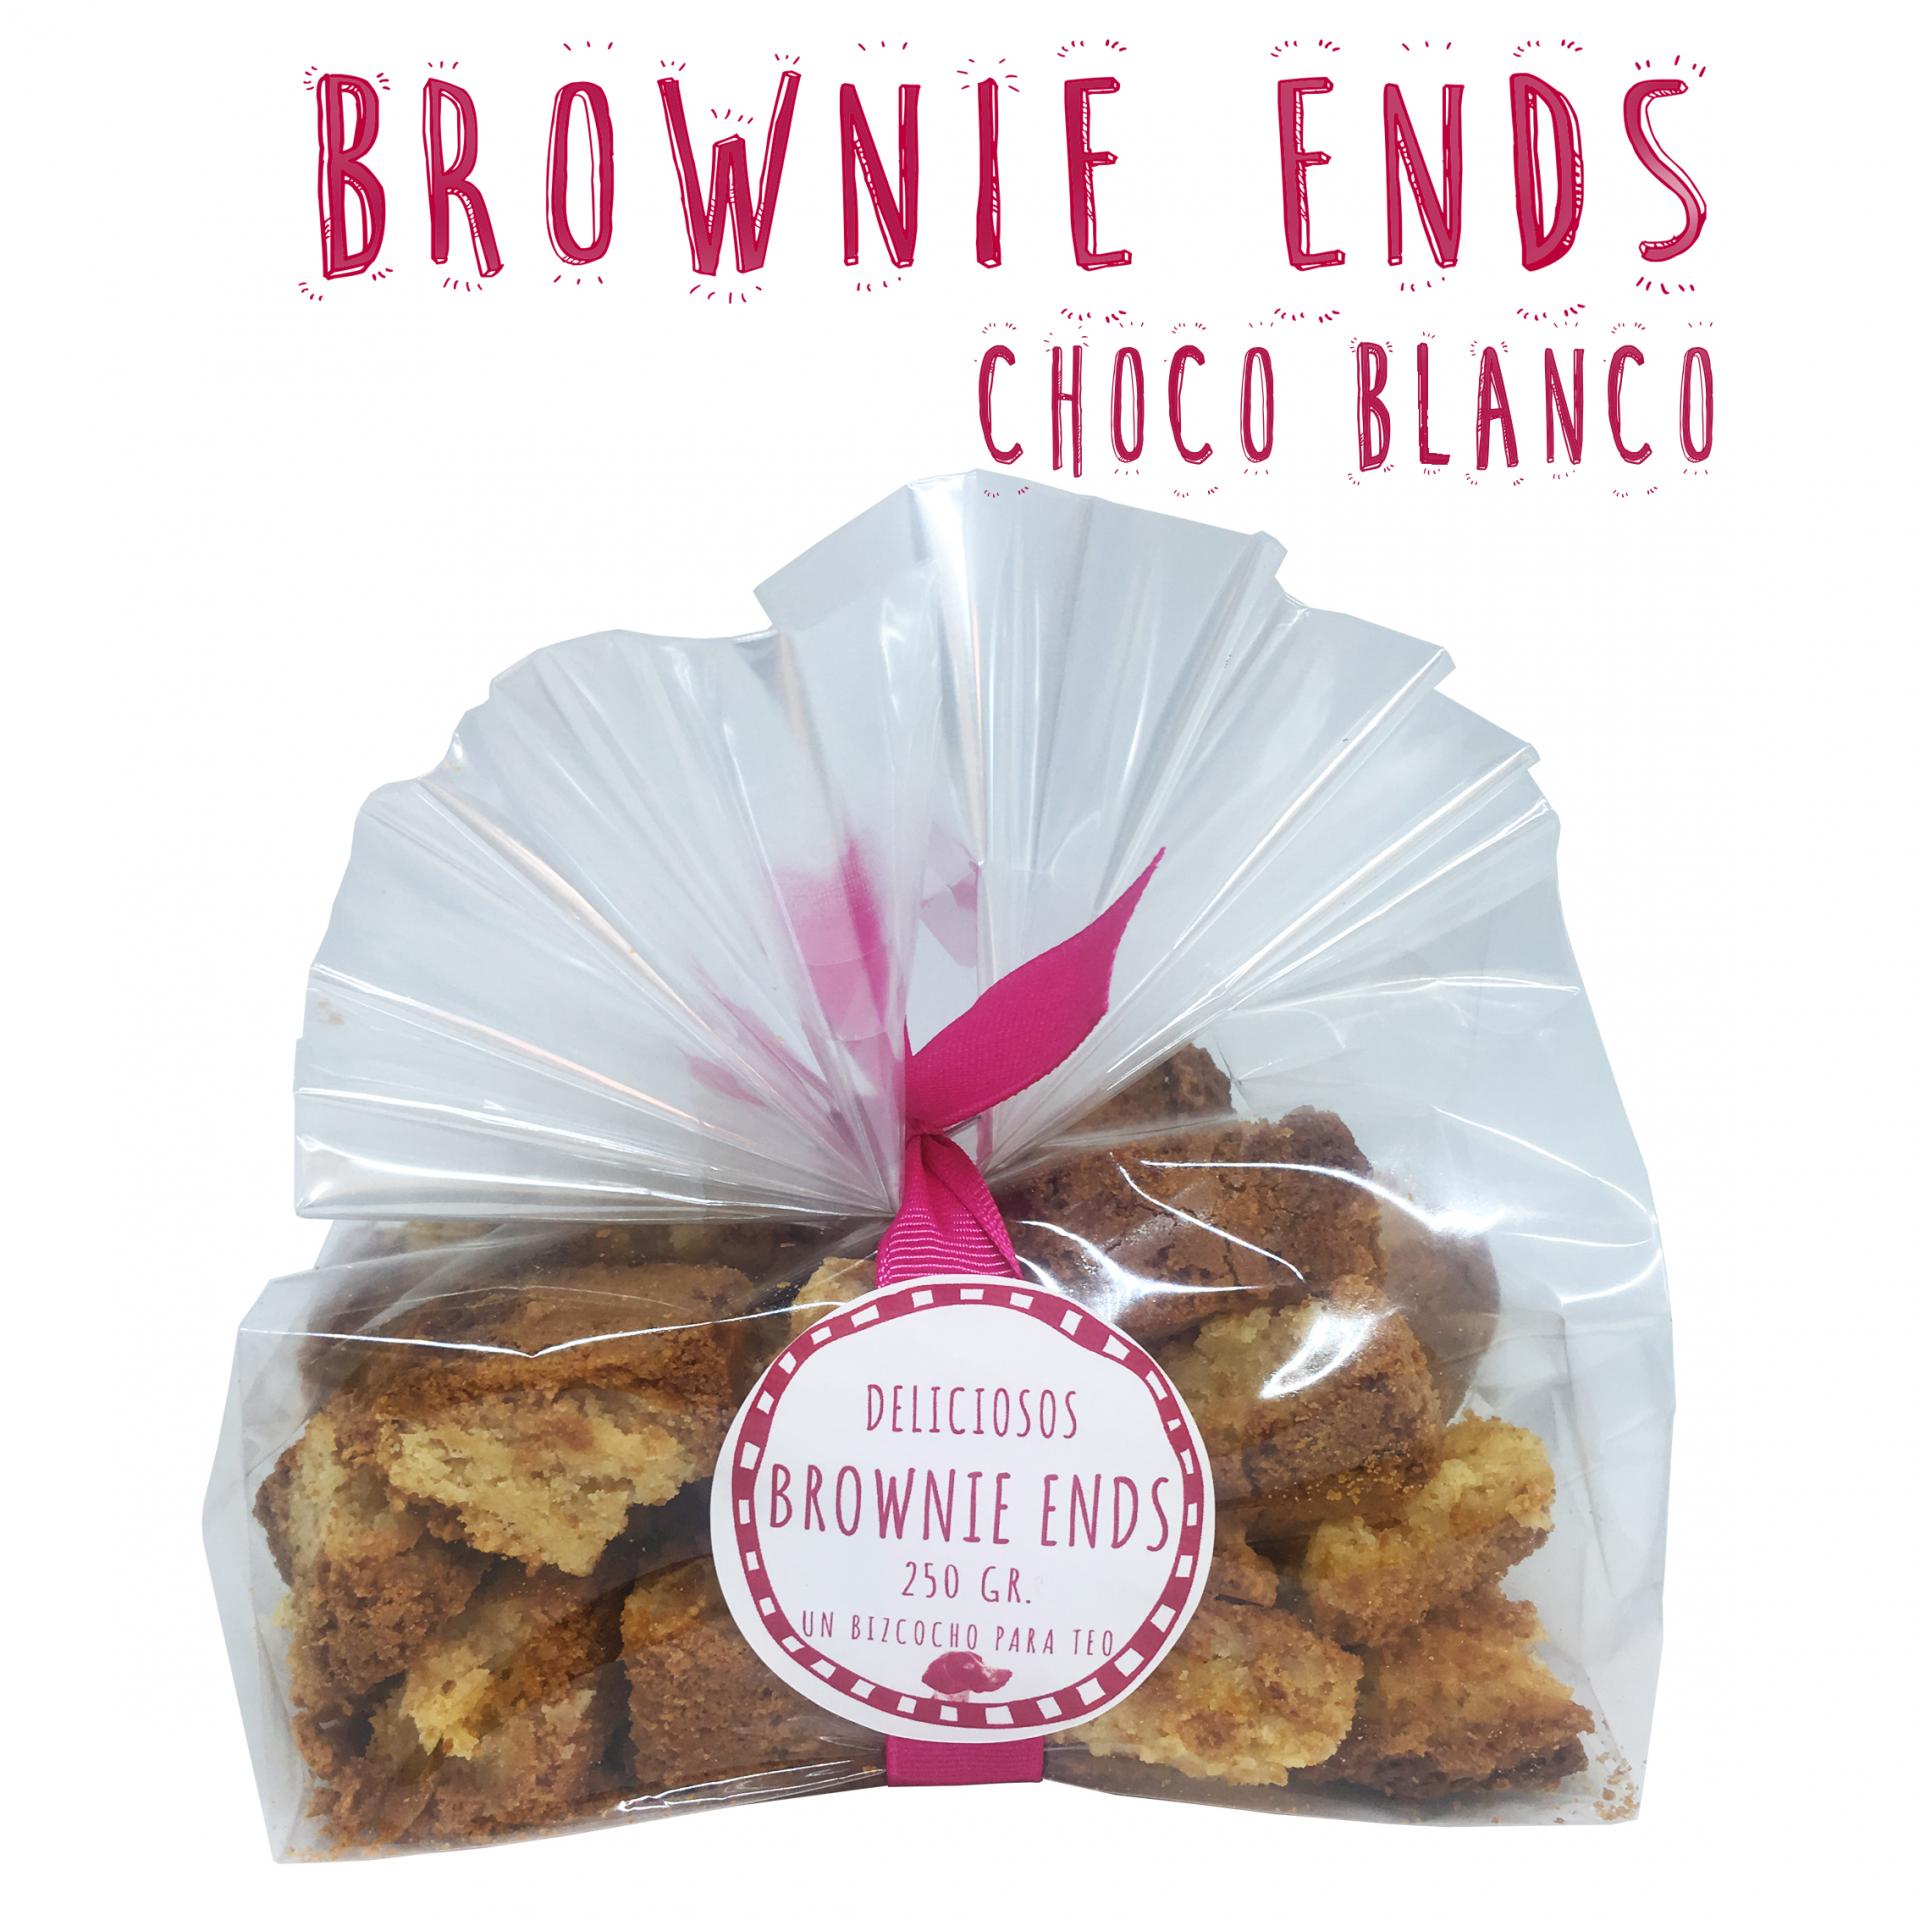 Brownie Ends Chocolate Blanco